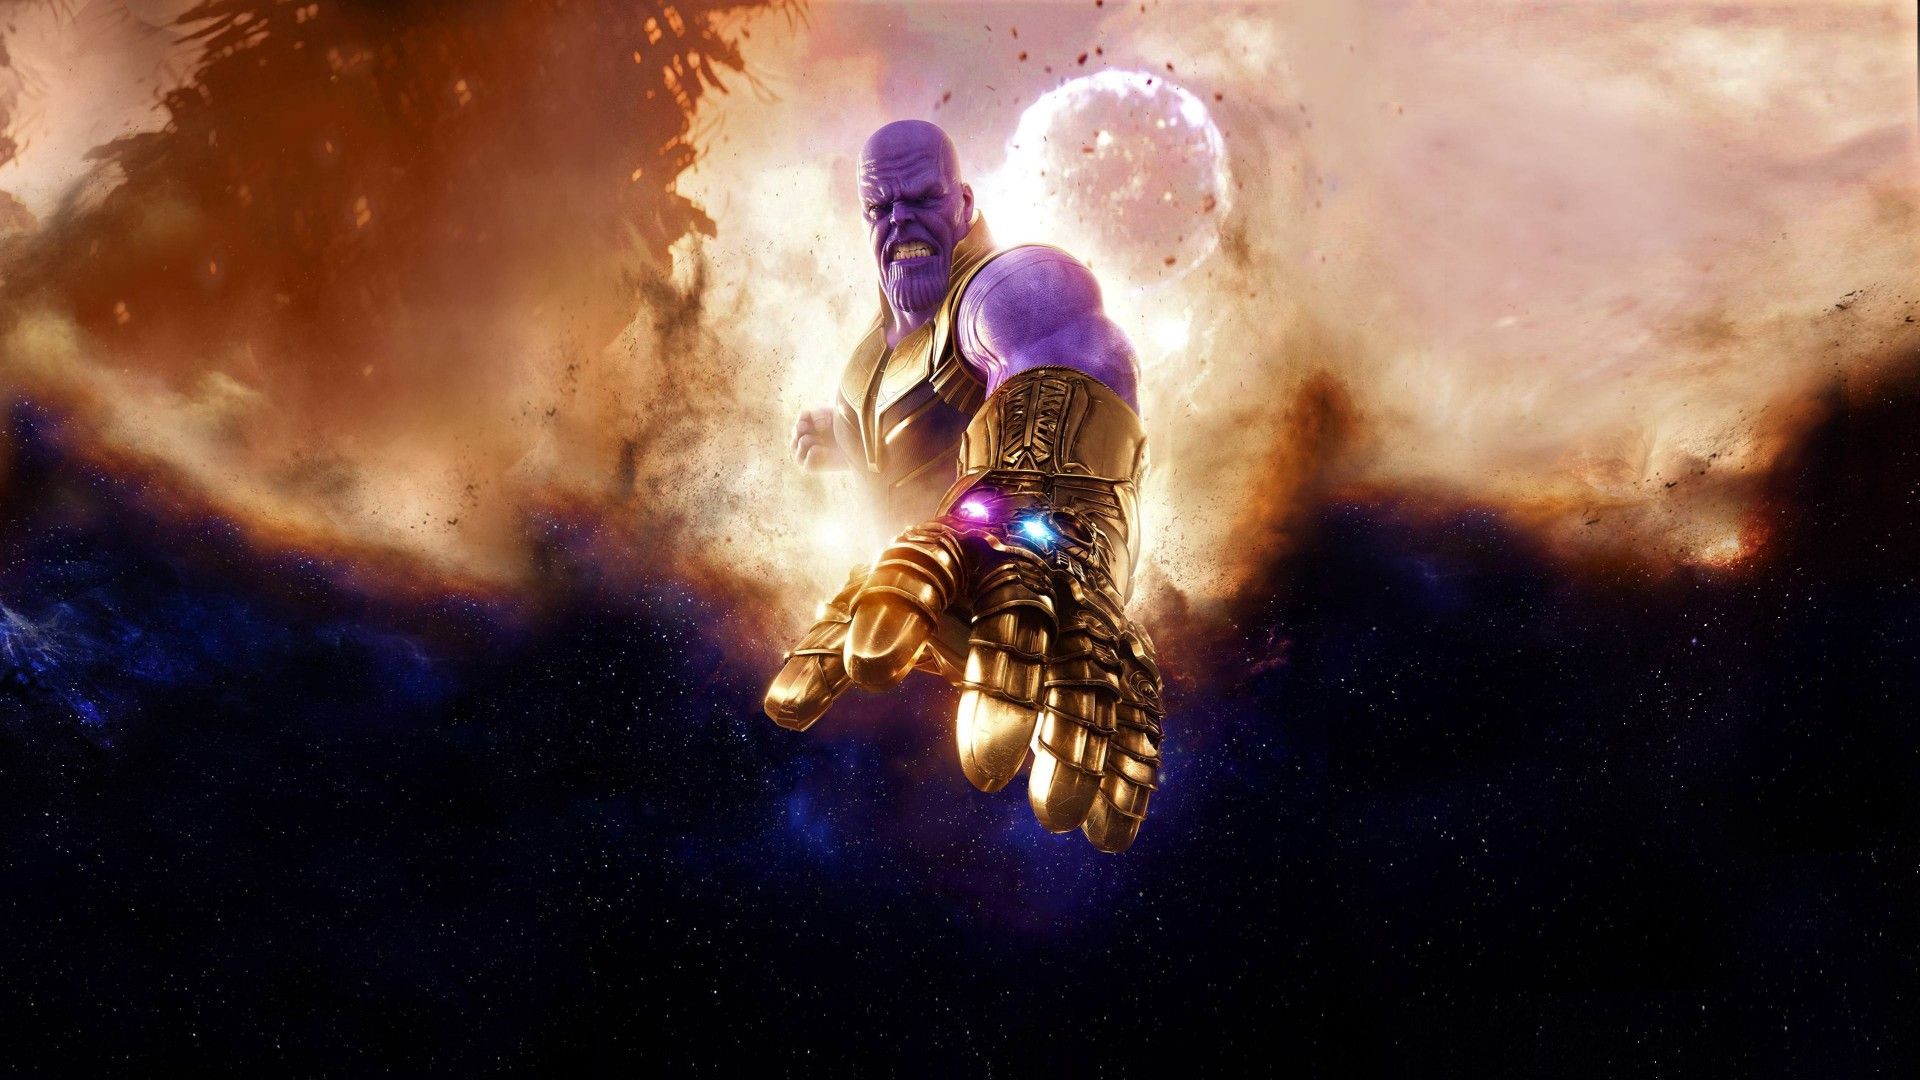 Thanos Infinity Gauntlet Download Free Image